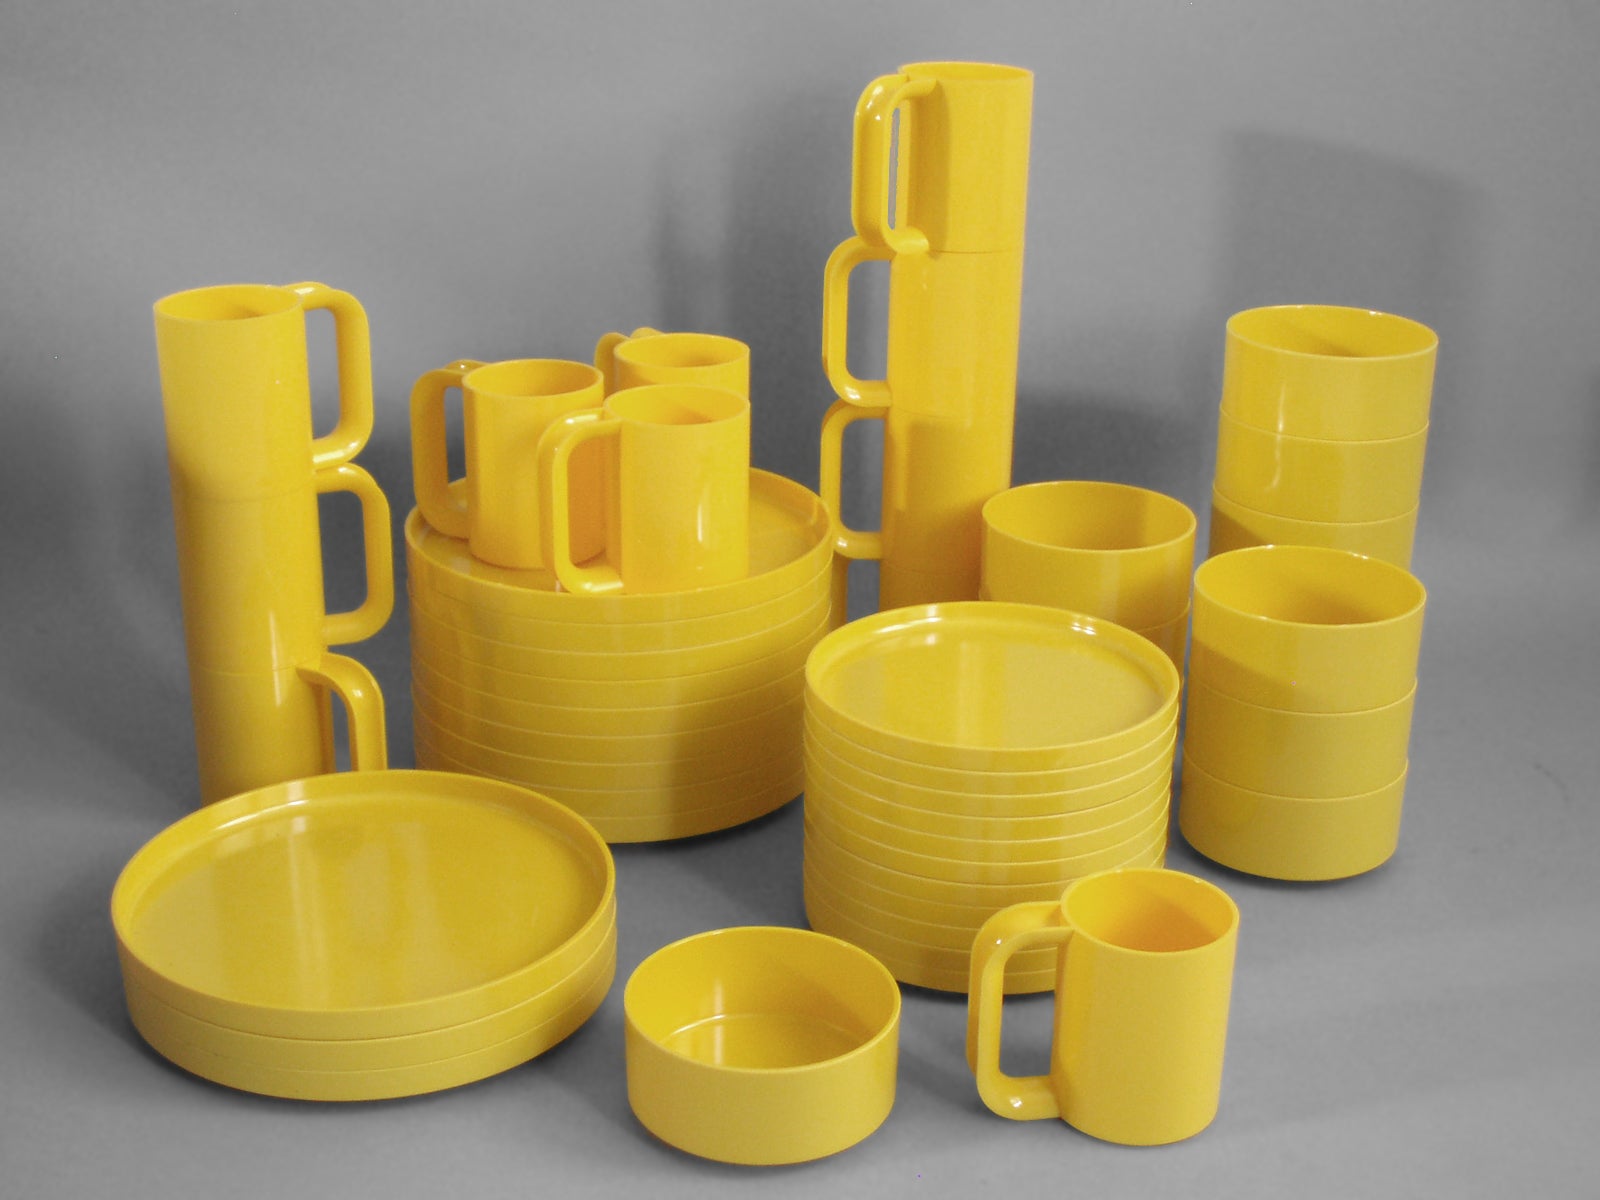 Plastic Dish Set by Massimo Vignelli for Heller